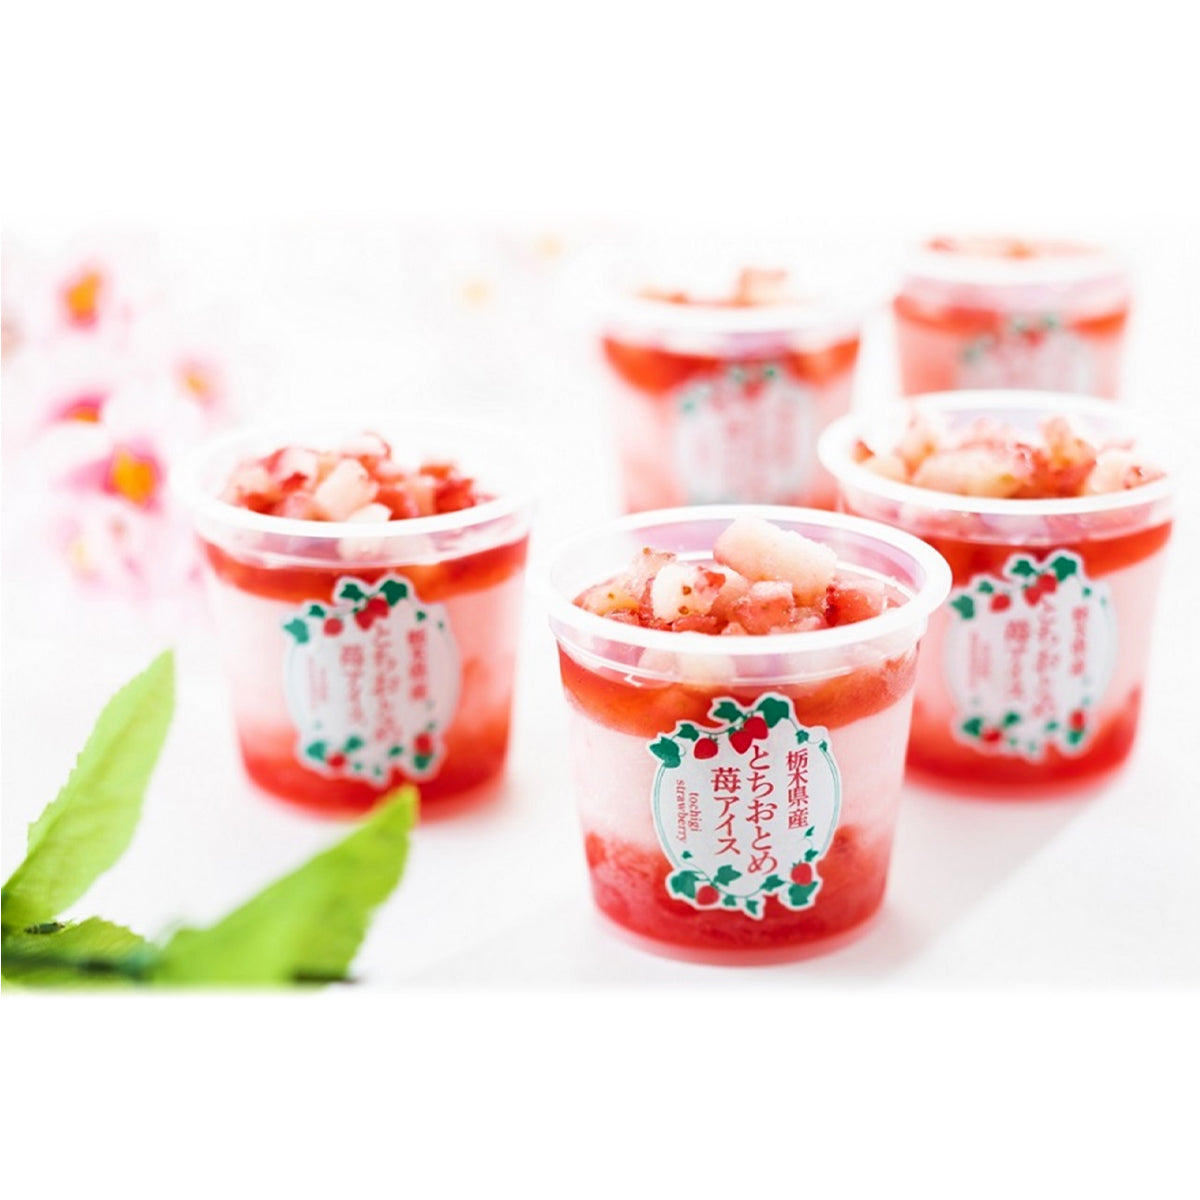 Tochiotome Strawberry Ice Cream